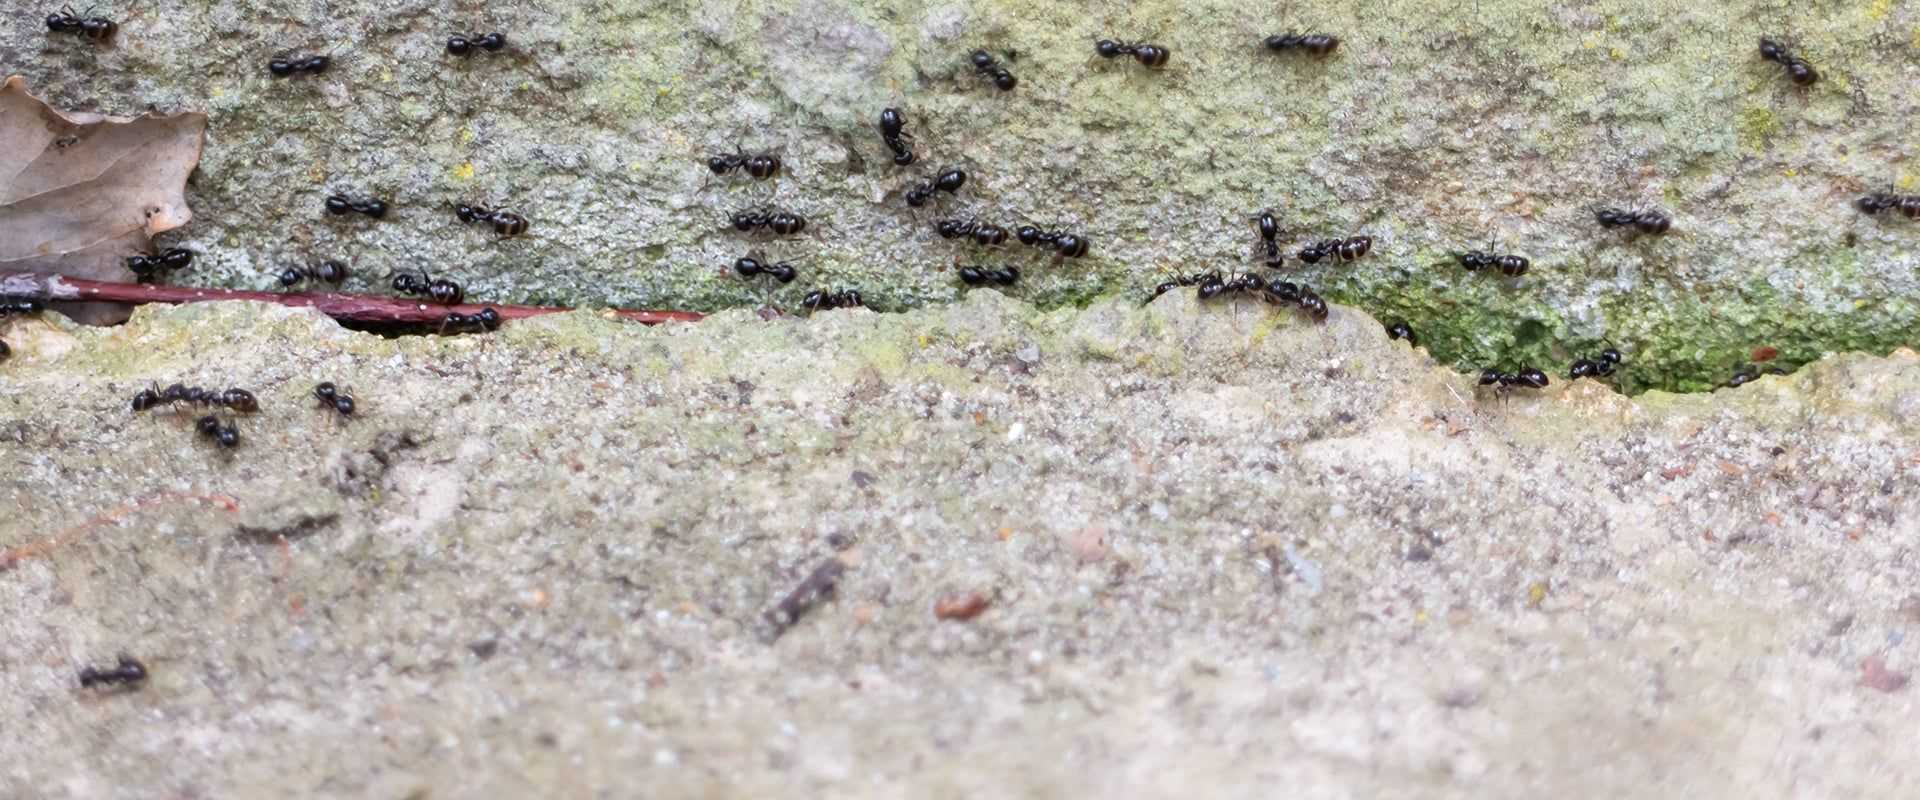 carpenter ant infestation outside a home